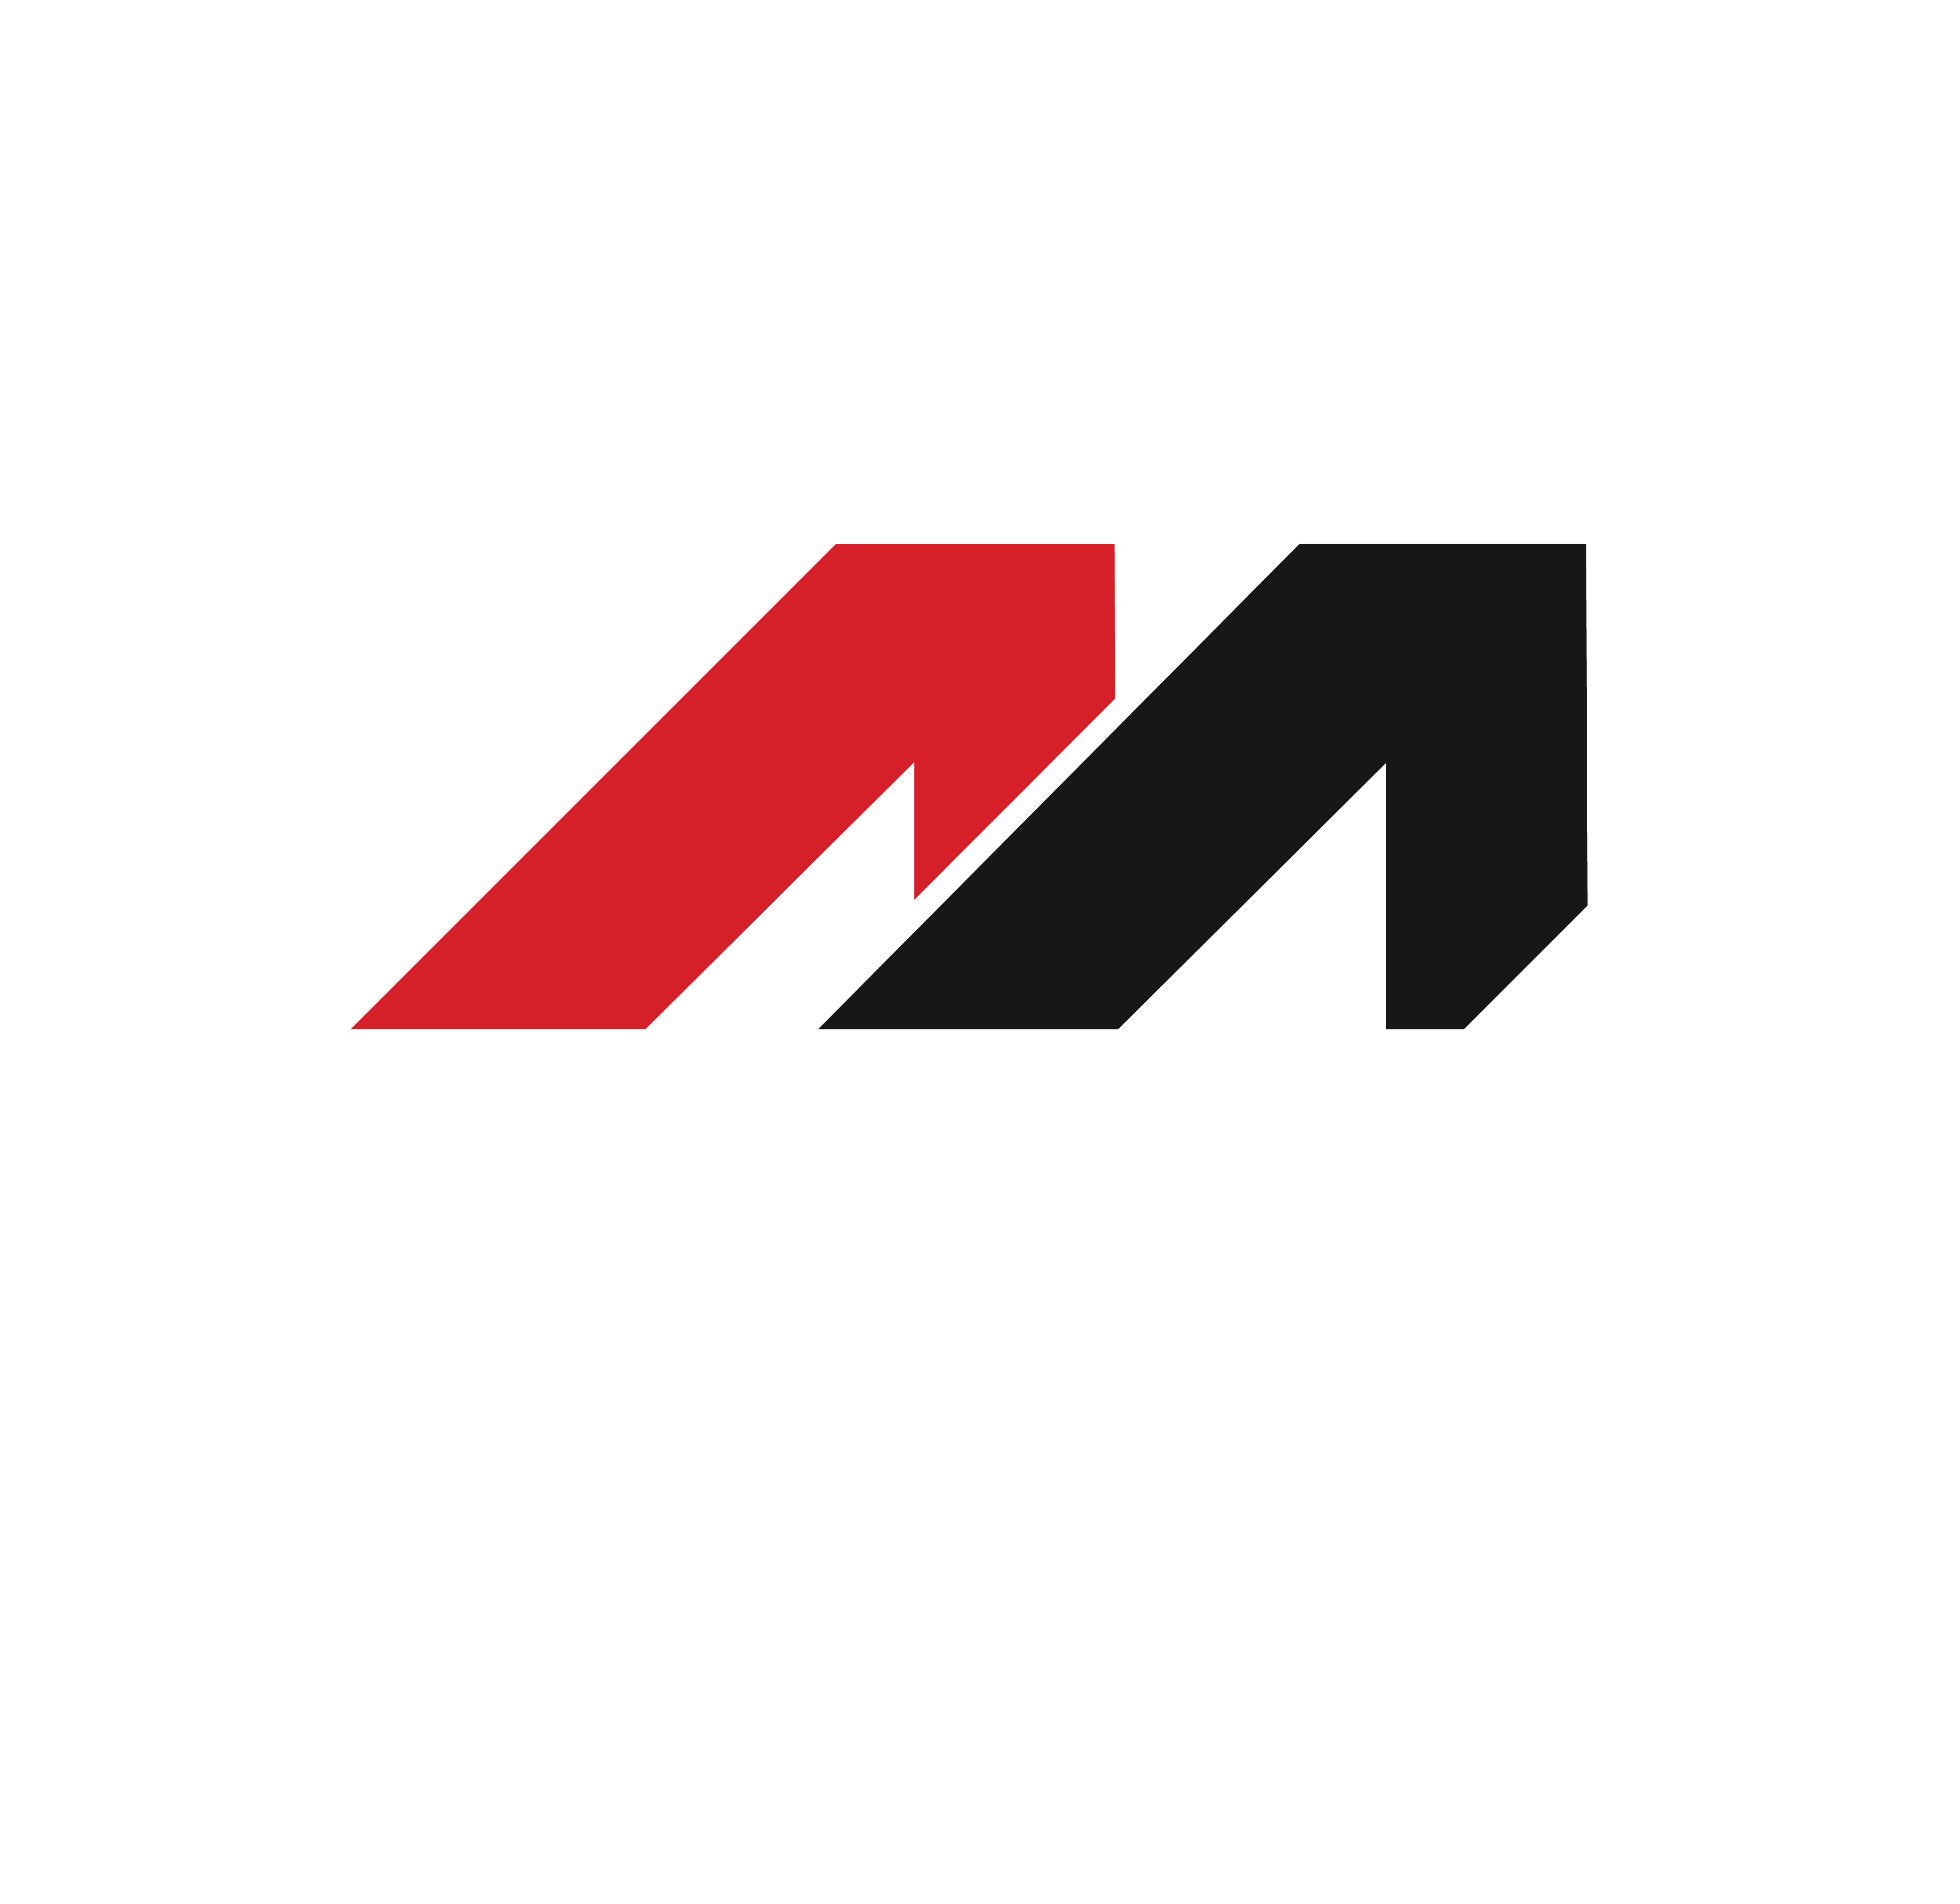 Momentum Digital Sdn Bhd